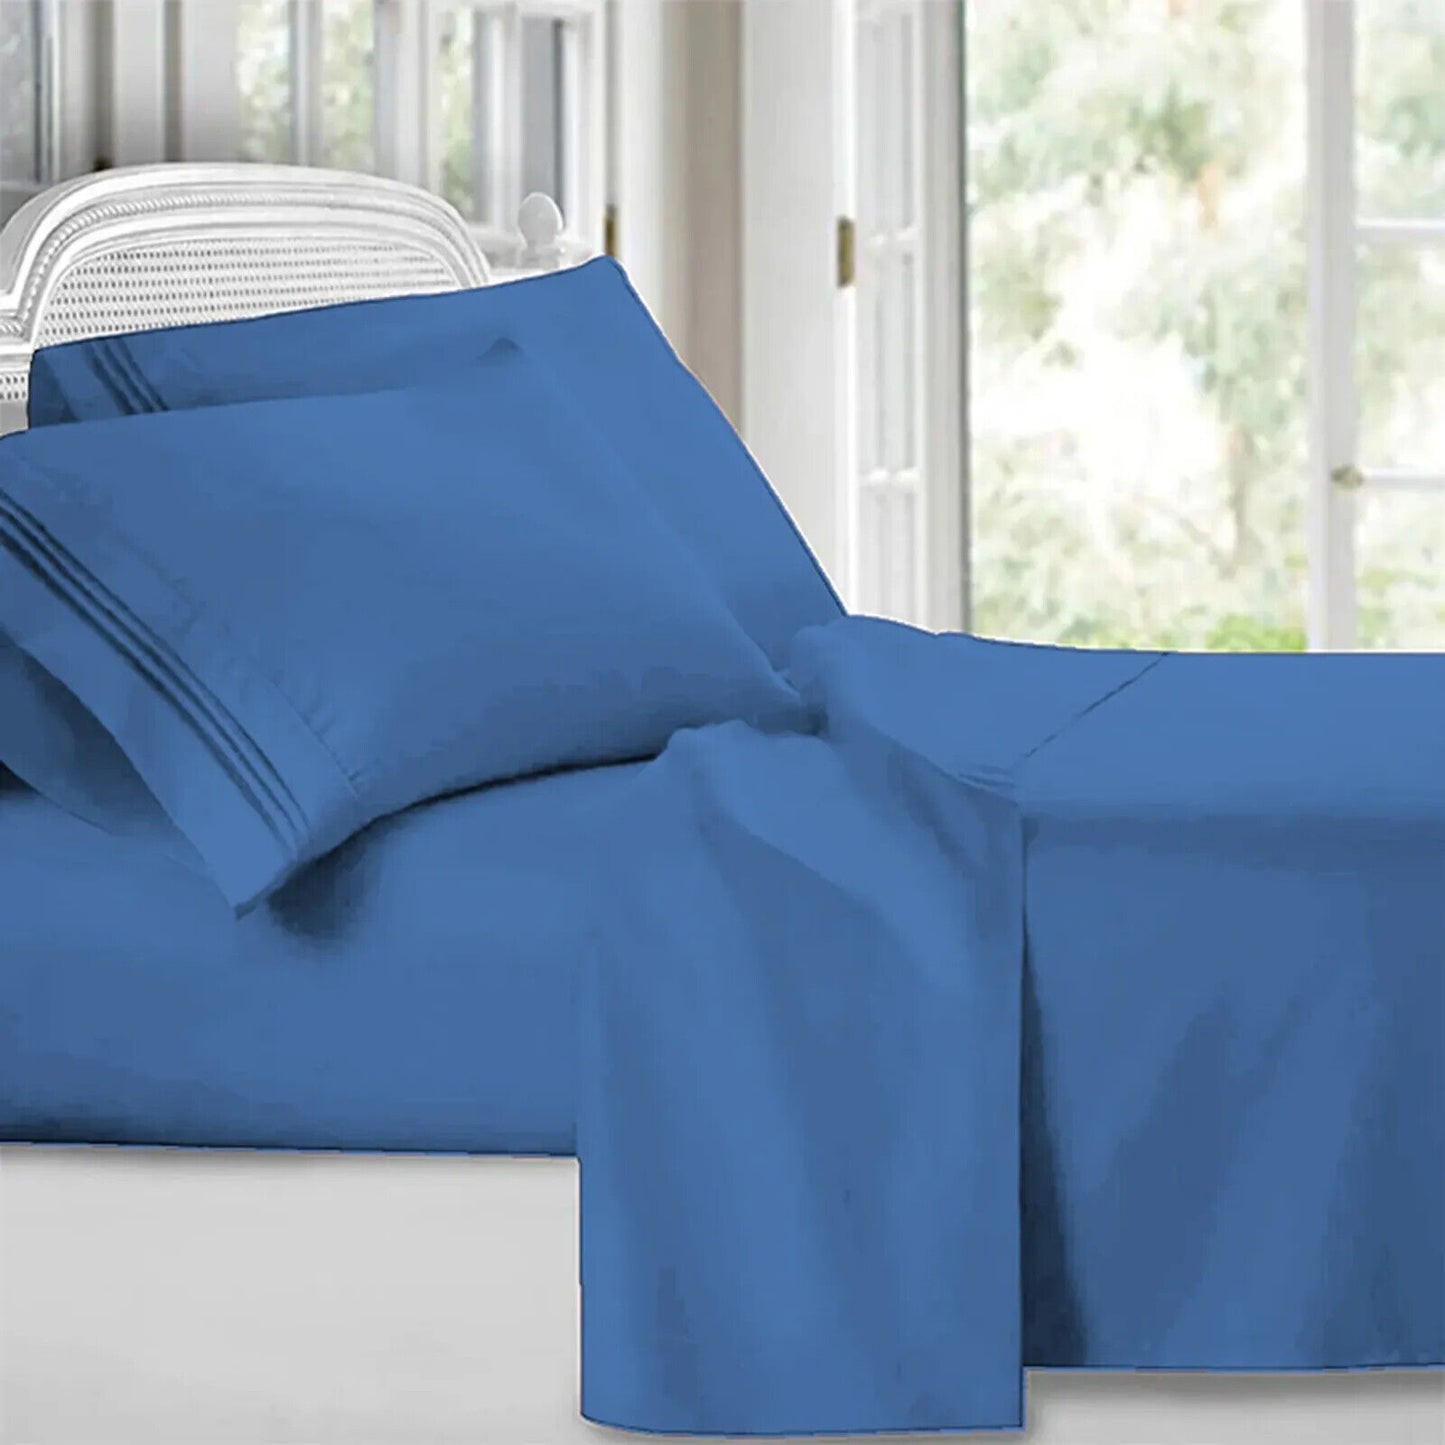 4 Piece Bed Sheet Set Deep Pockets King Queen Size Super Soft Cotton 2500 Series Blue Color